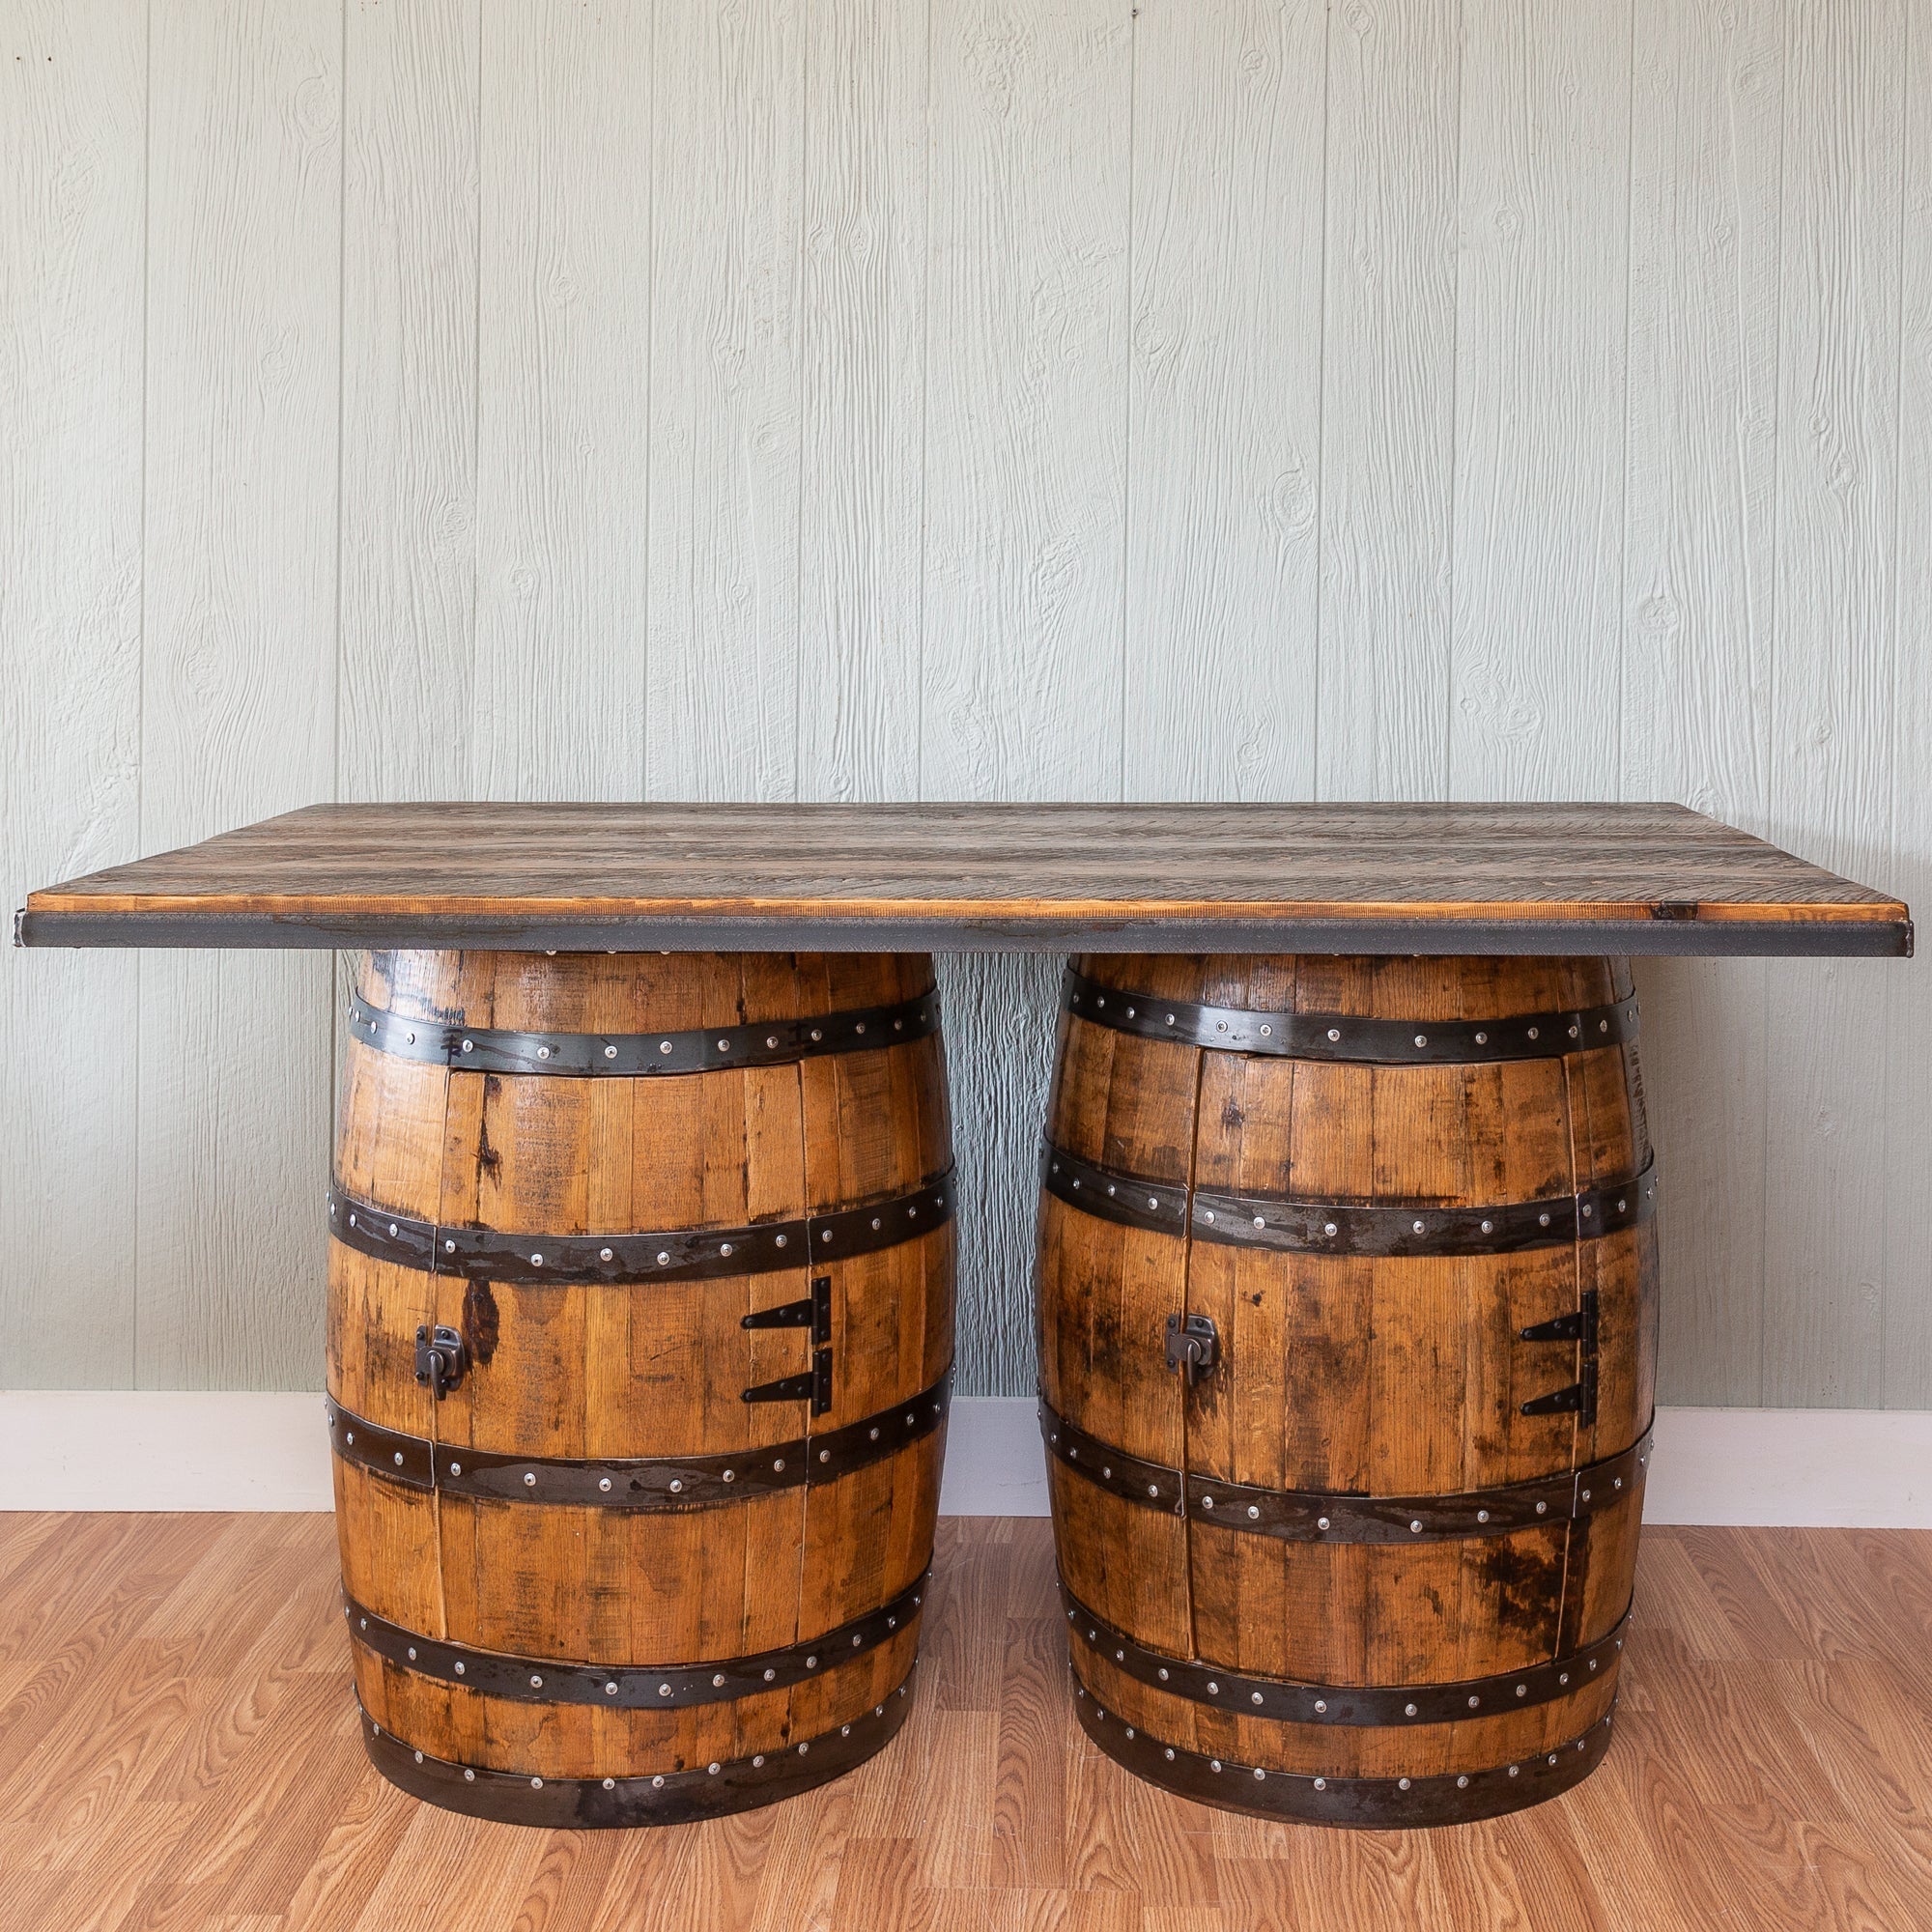 Napa East Whiskey Barrel Bar with 4 Barstools - The Bar Design